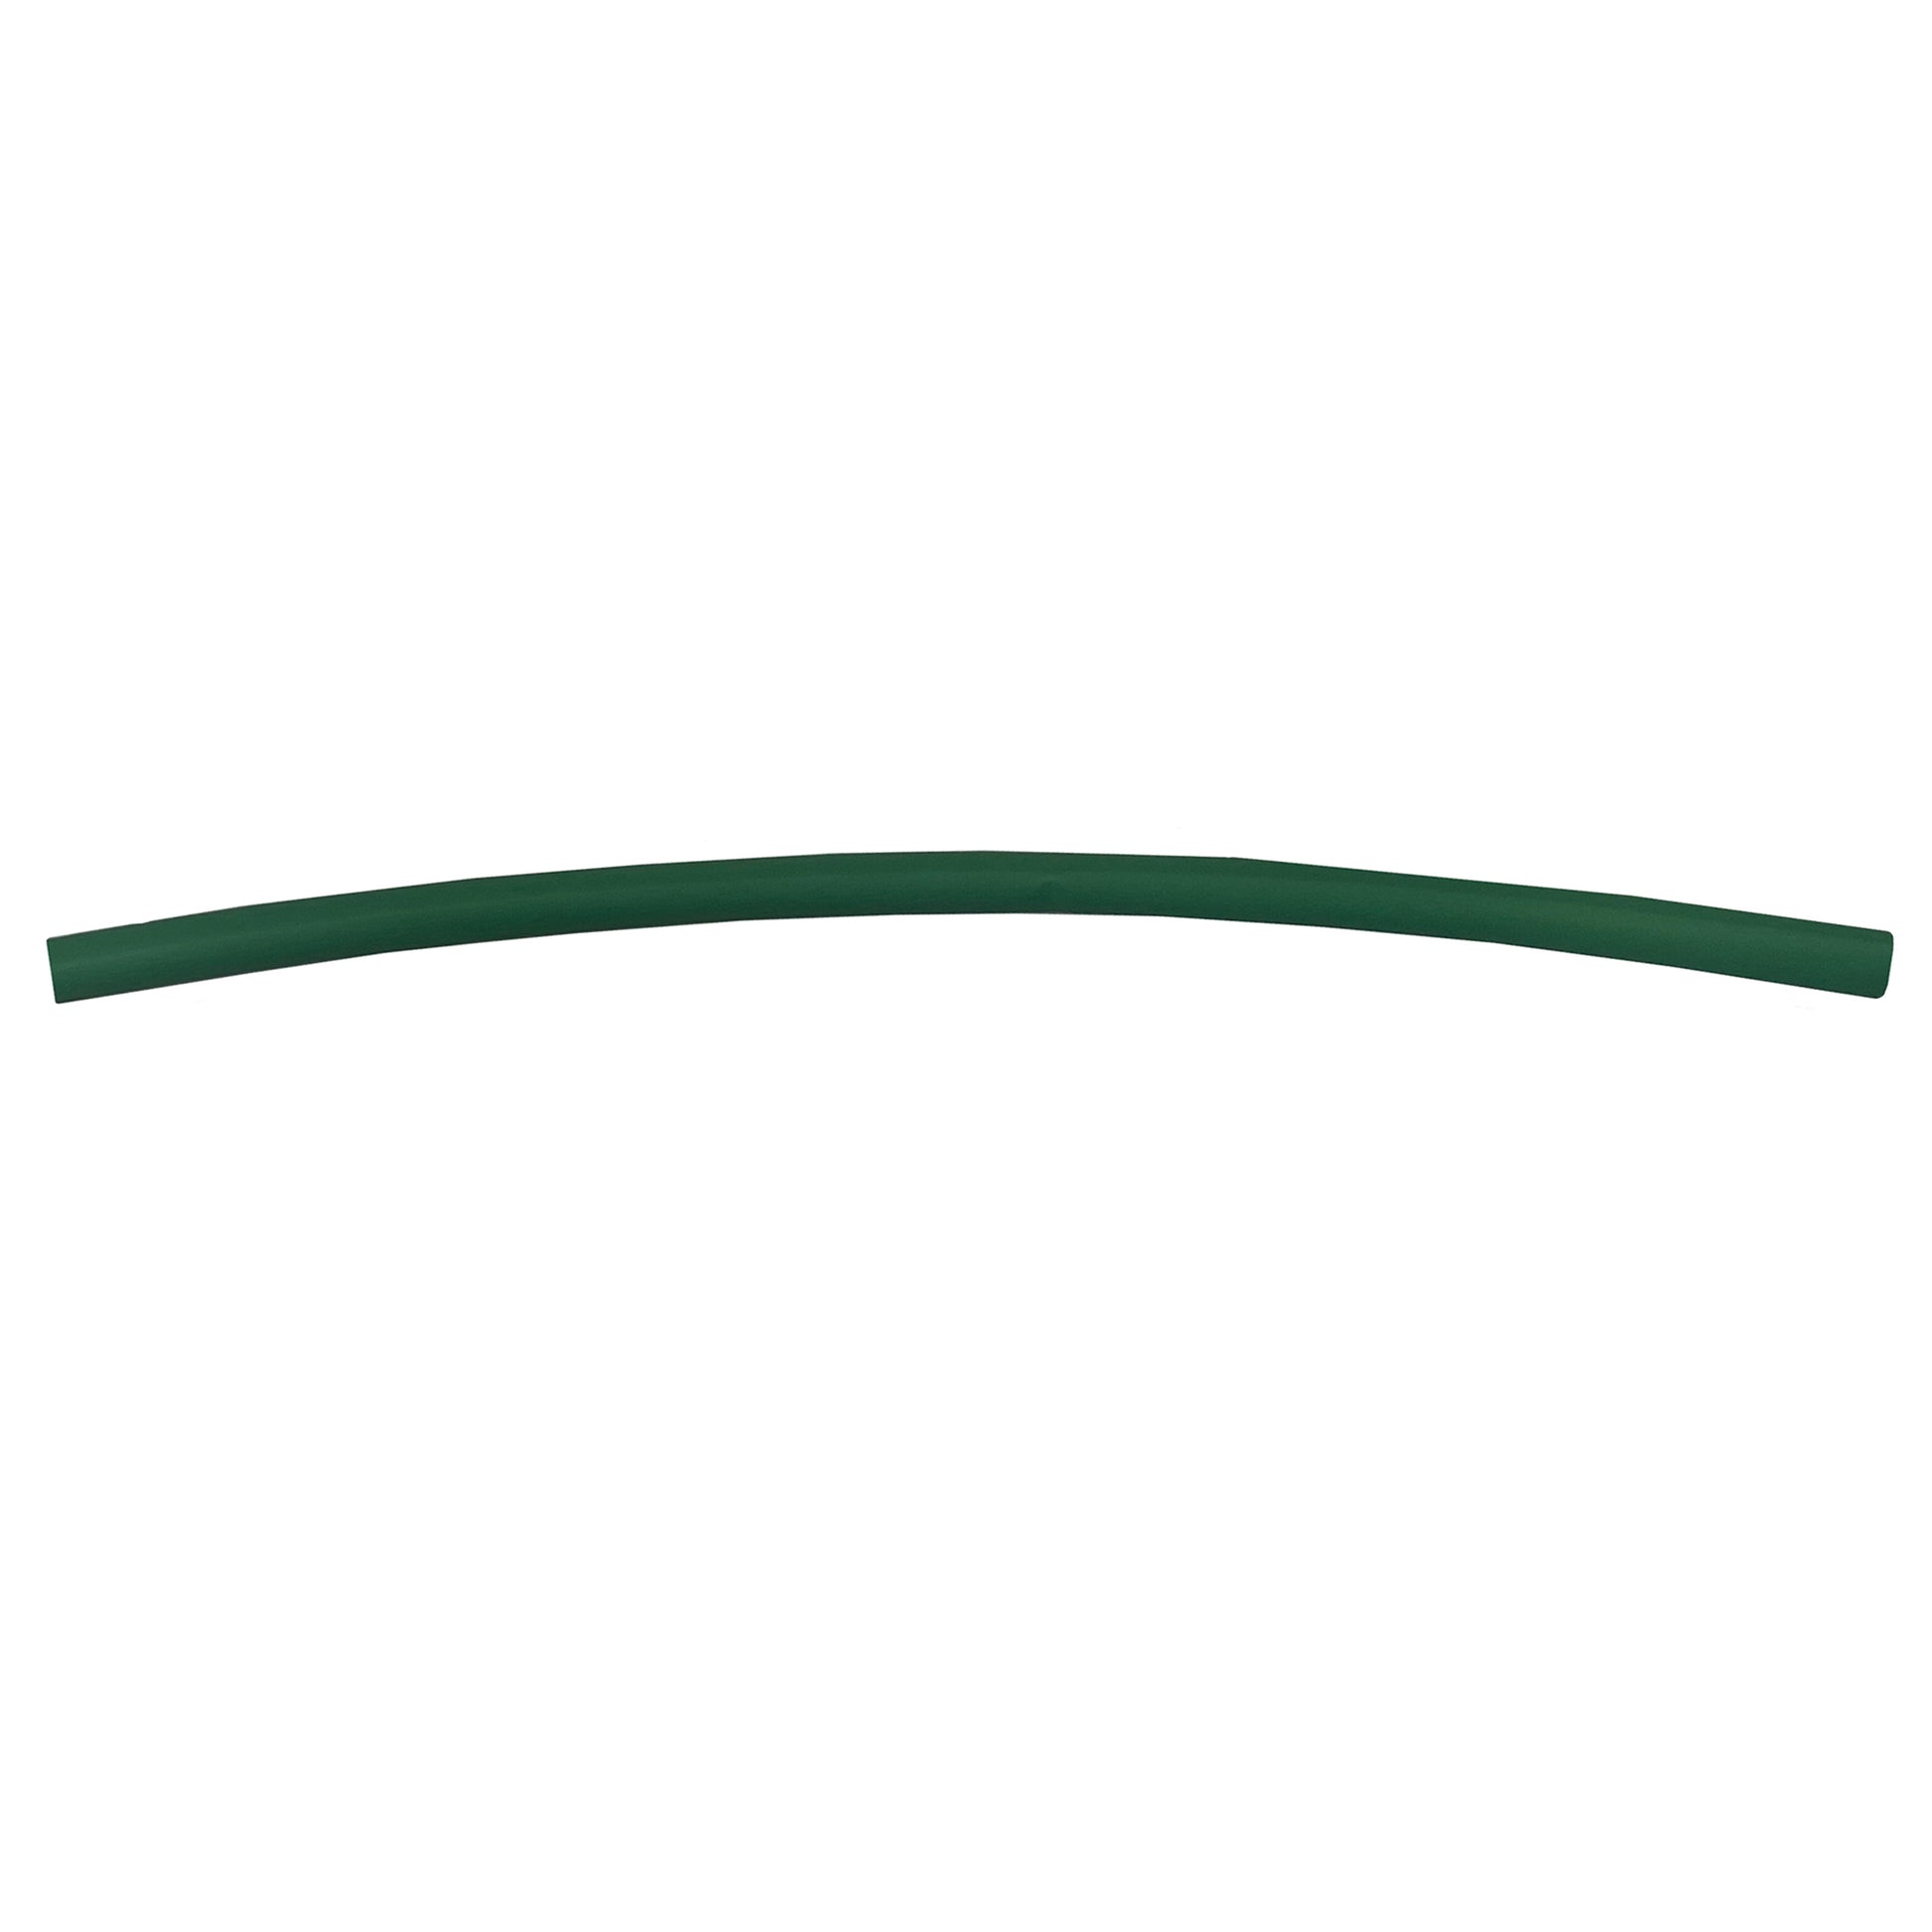 Flexible Thin Single Wall Non-Adhesive Heat Shrink Tubing 2:1 Green 3/16" ID - 100' Ft Spool